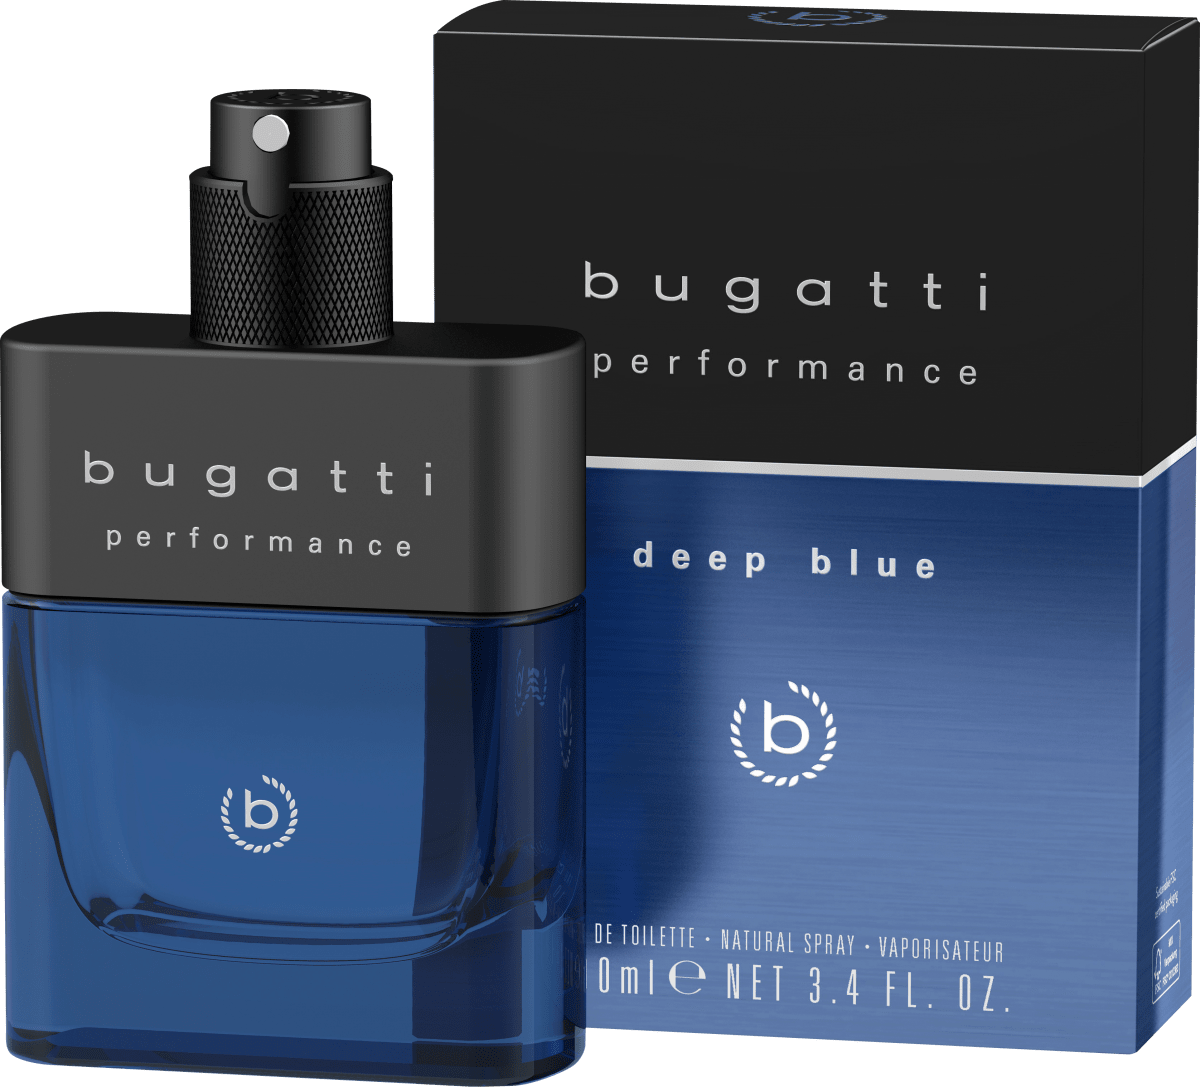 Performance 100 bugatti ml deep Eau blue, de Toilette